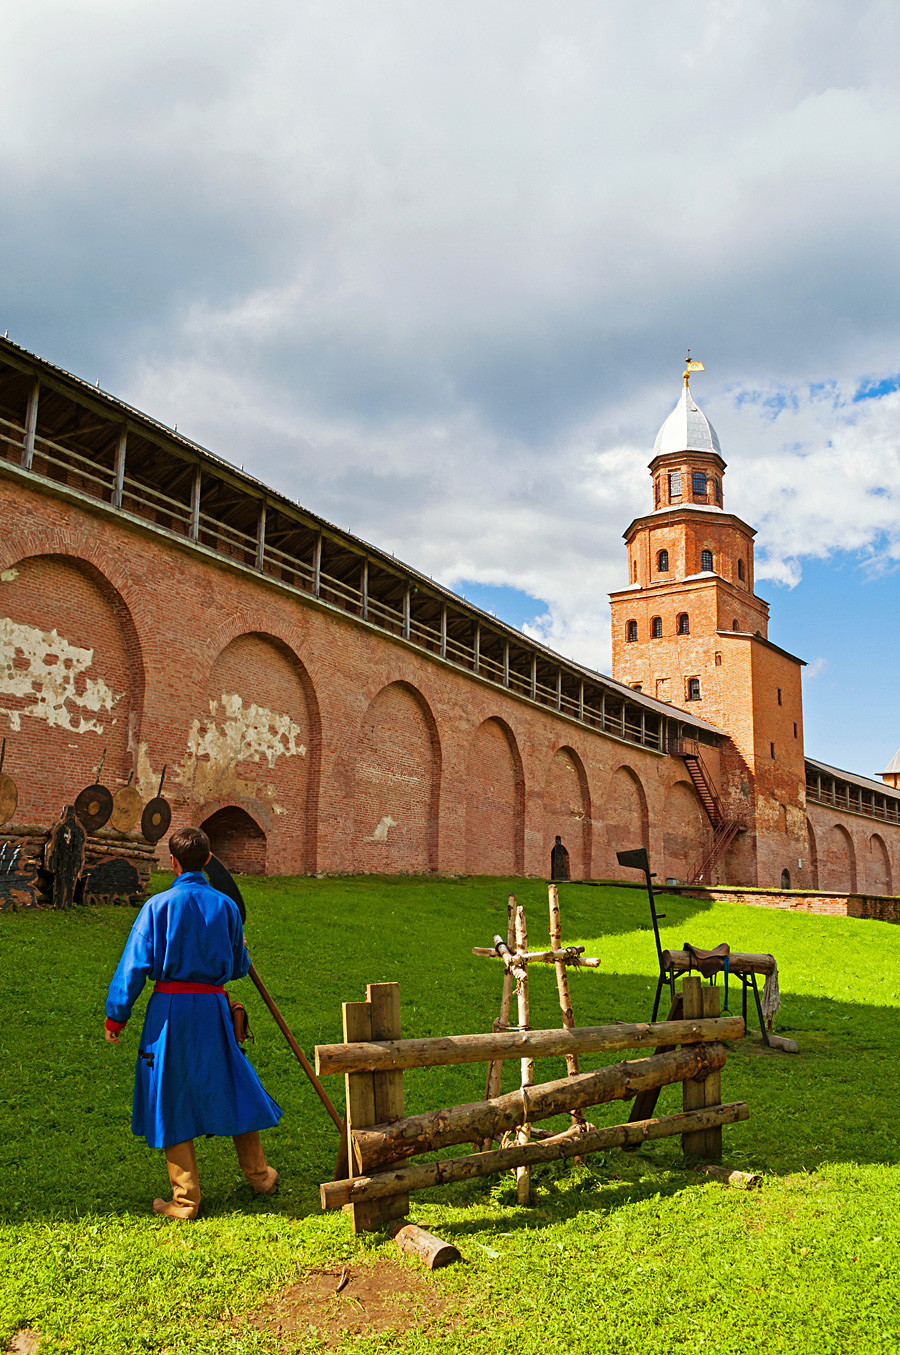 Kokui tower of Veliky Novgorod Kremlin and man dressed in medieval clothes in Veliky Novgorod, Russia.